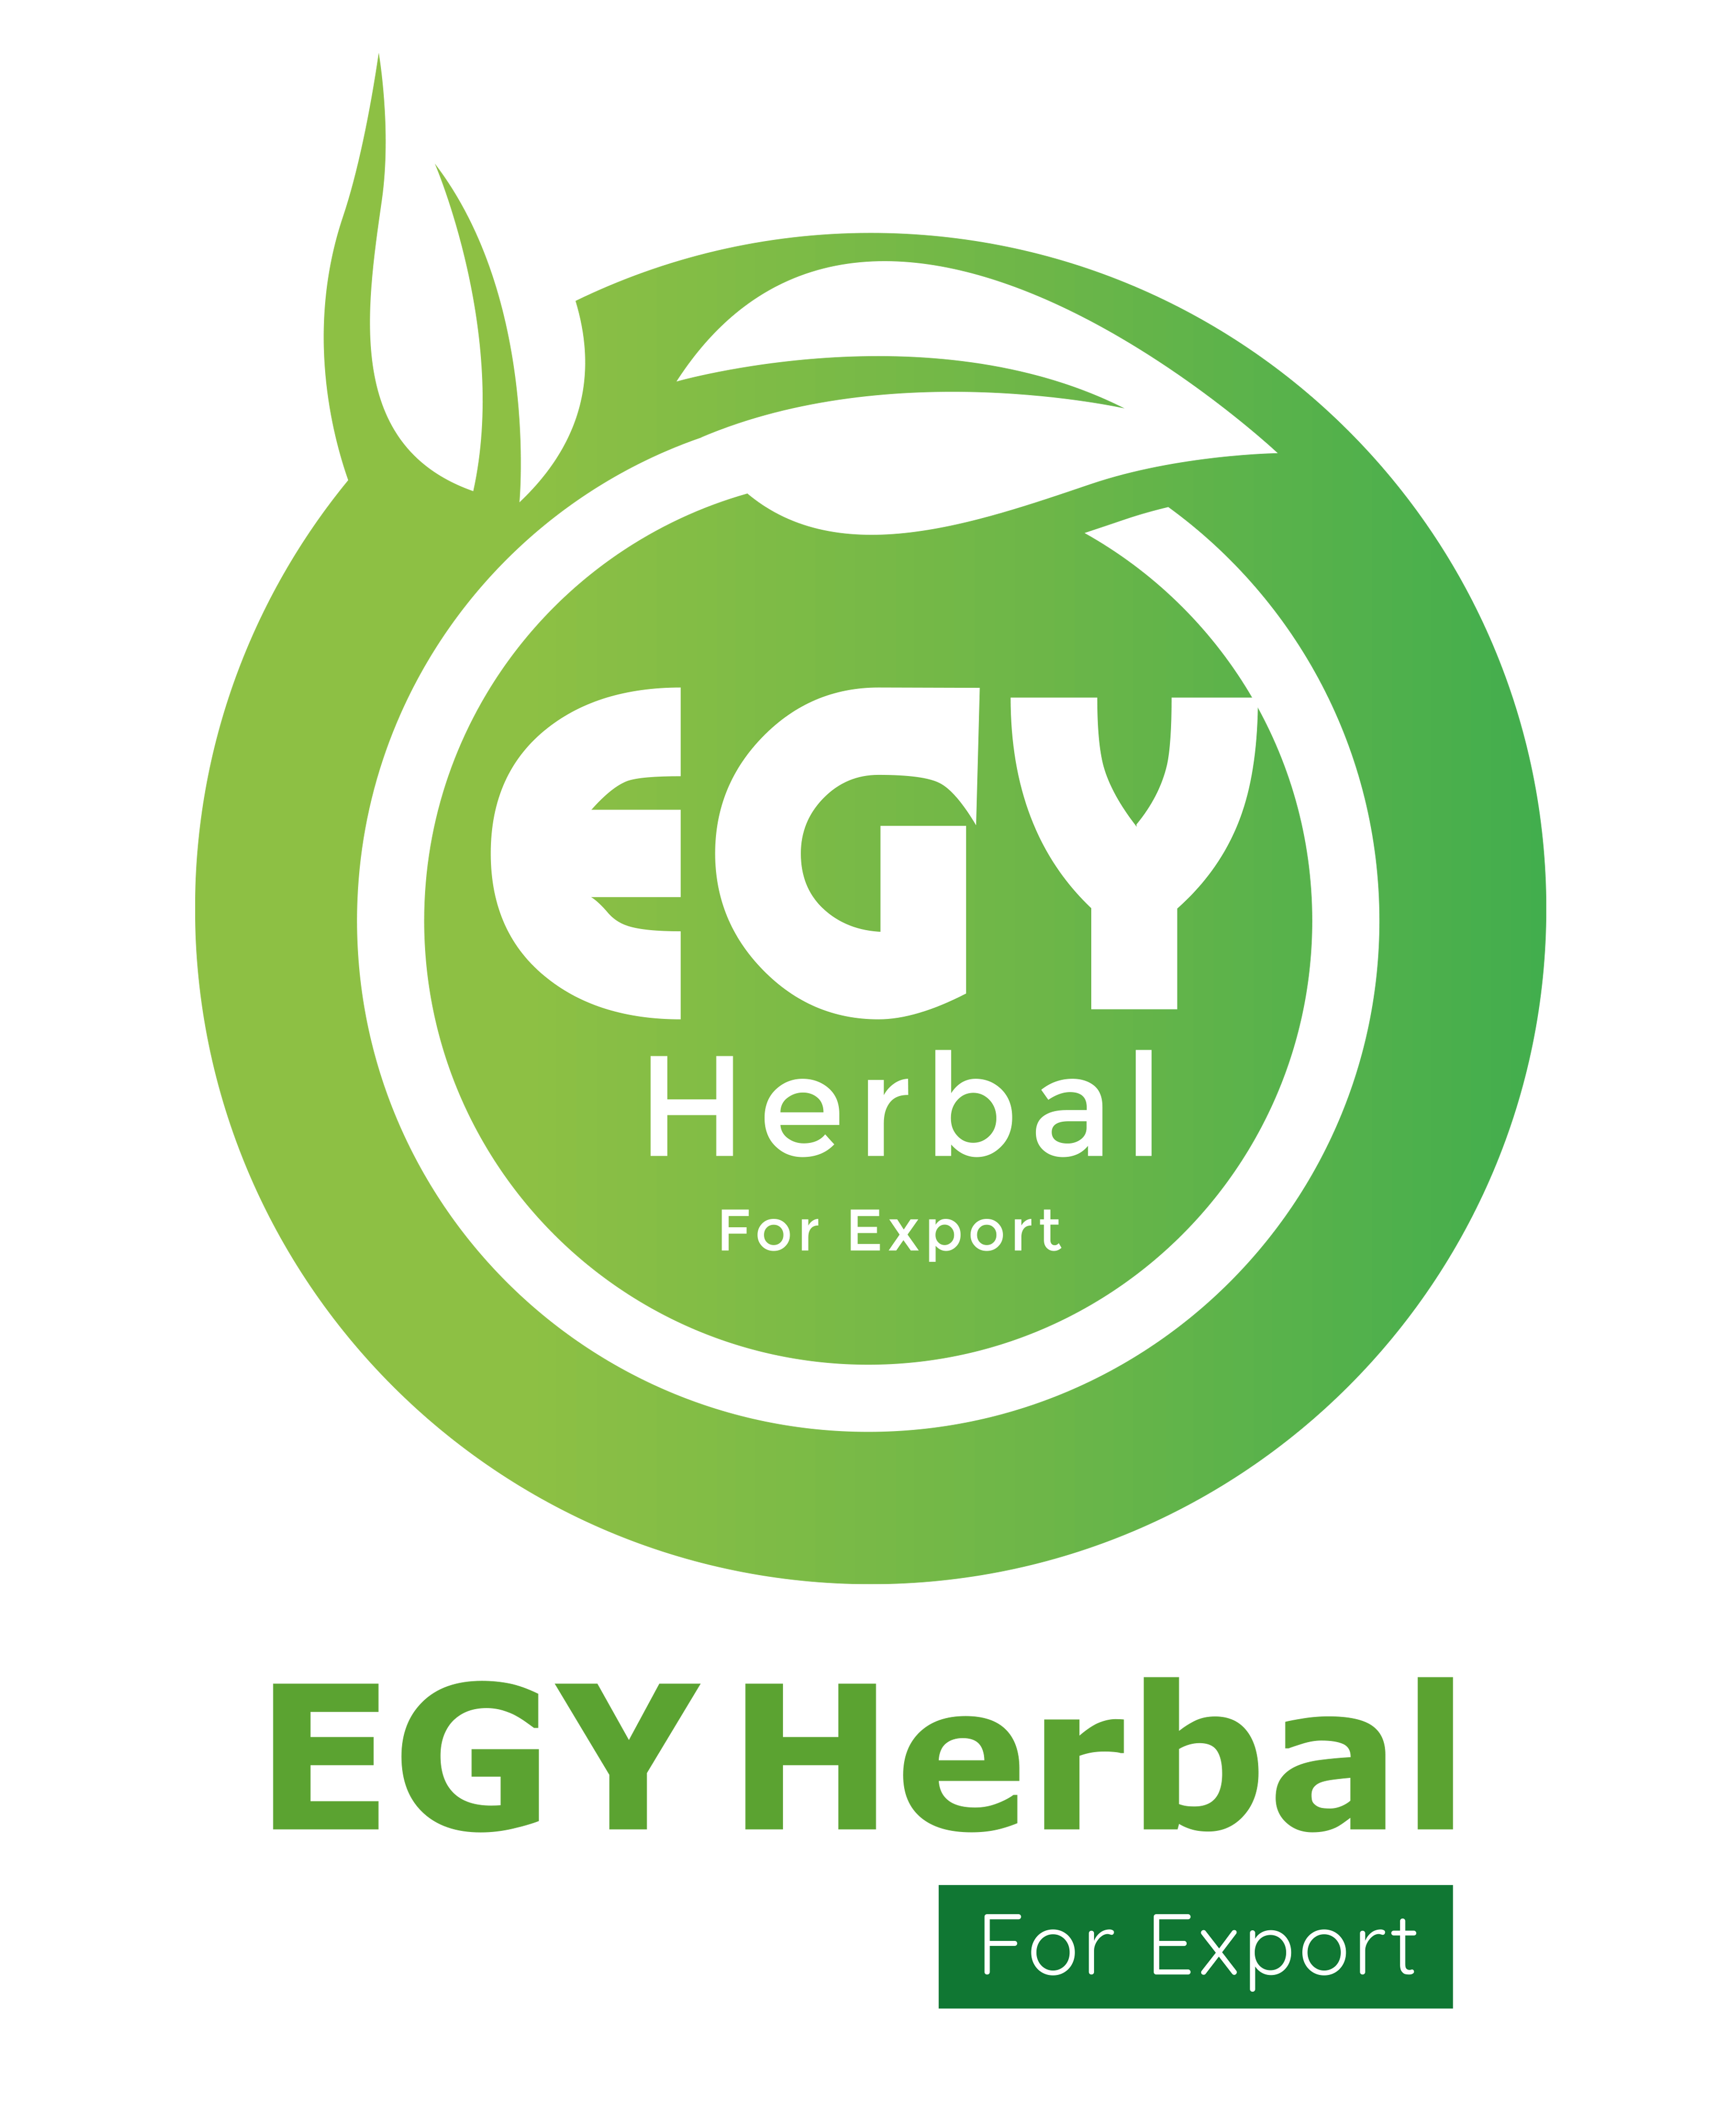 EGY-Herbal-logo_Final-